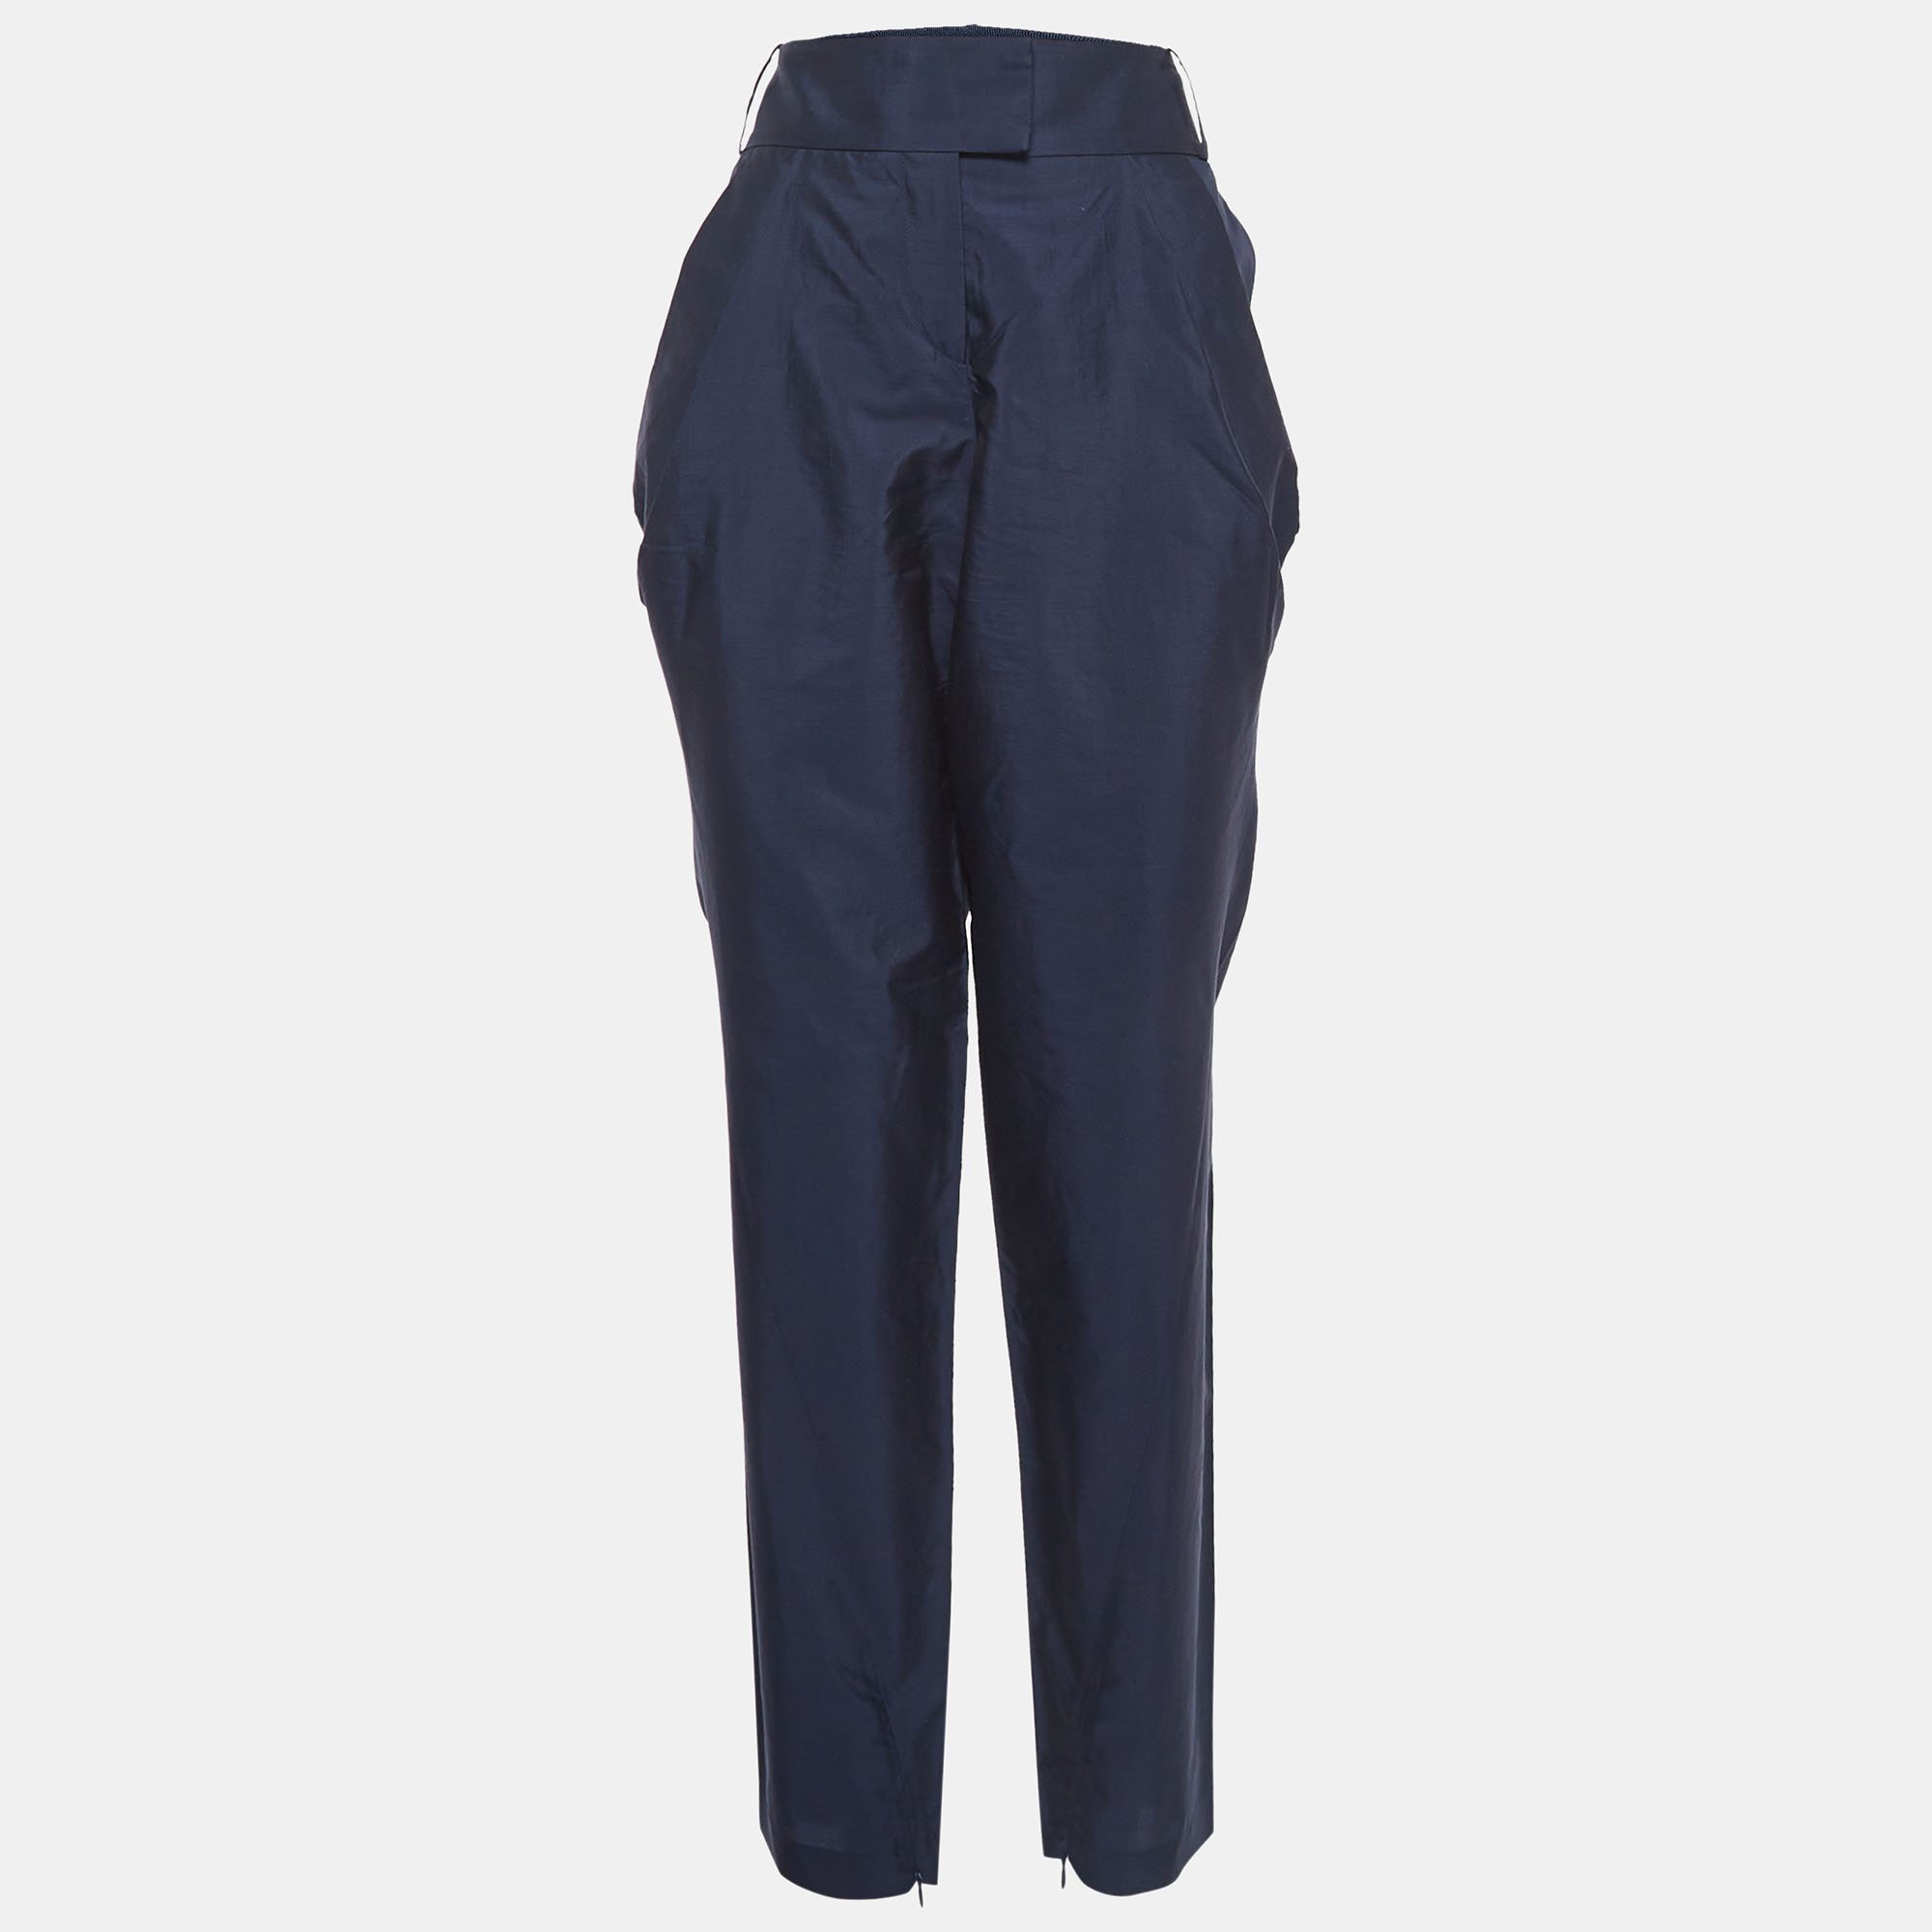 Giorgio armani navy blue silk blend trousers l